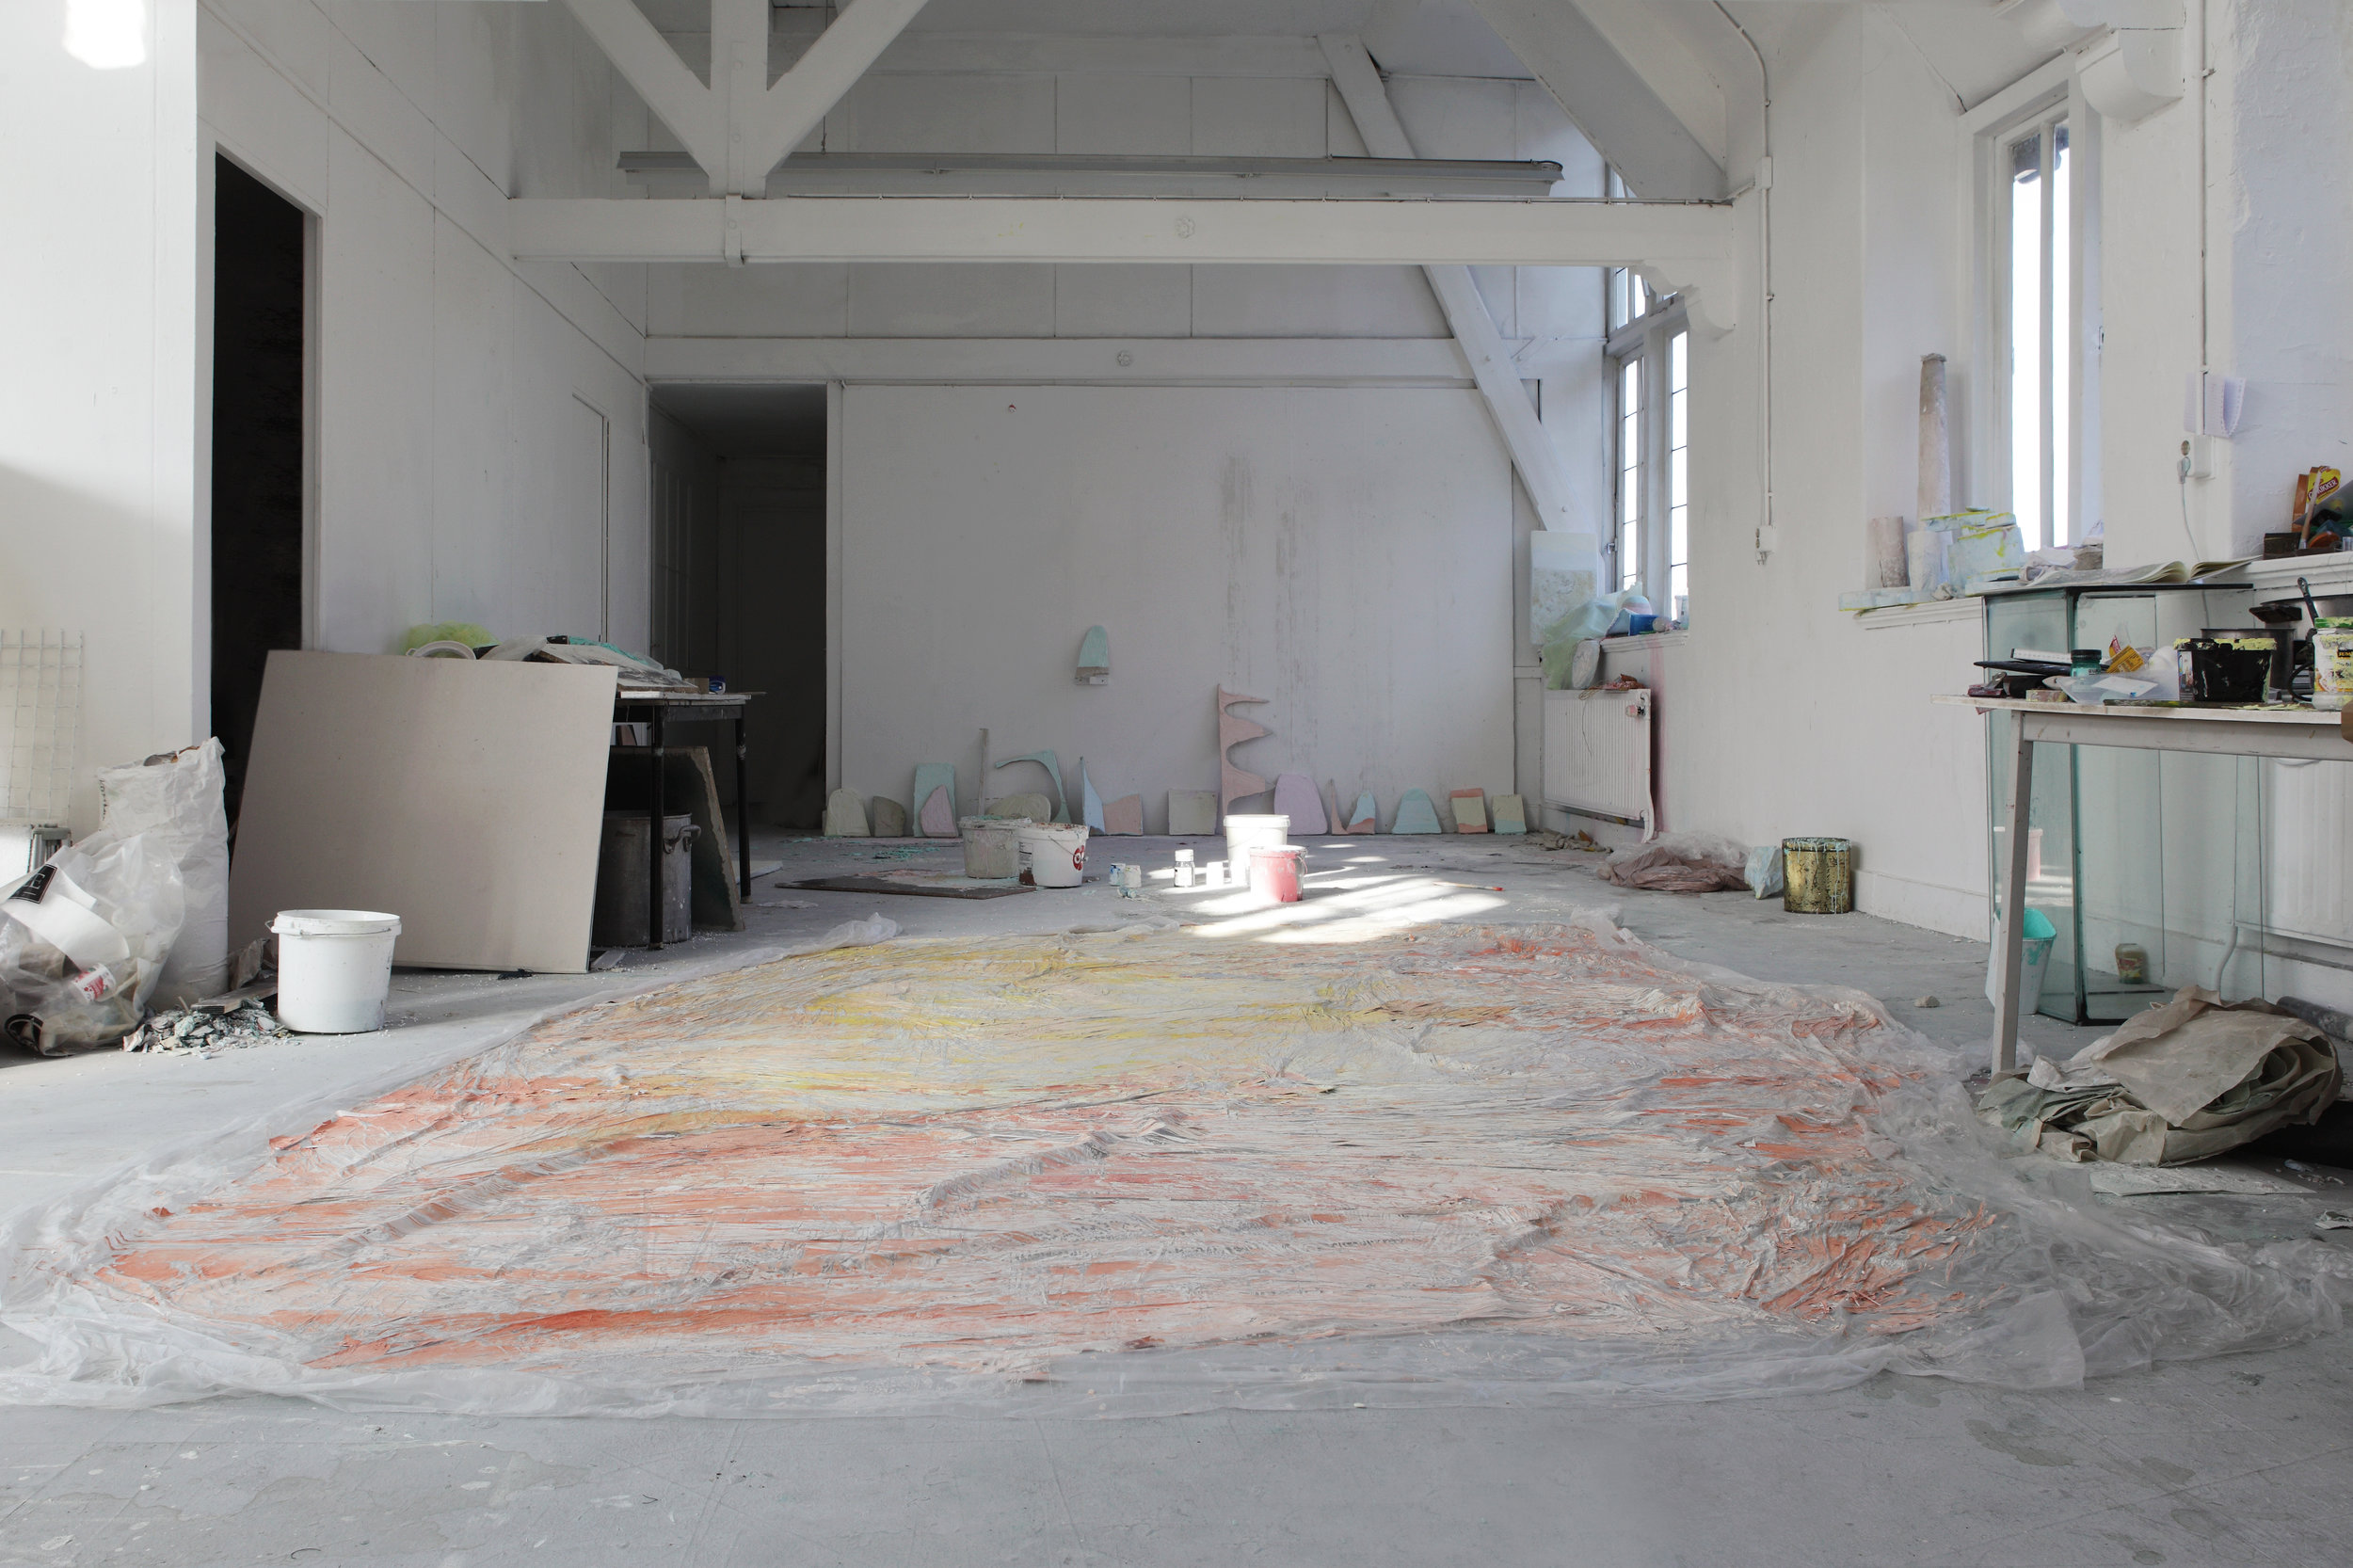 Studio view 2014: Colored sheet - Plastic, various paints, 500 x 200, Maastricht, 2014